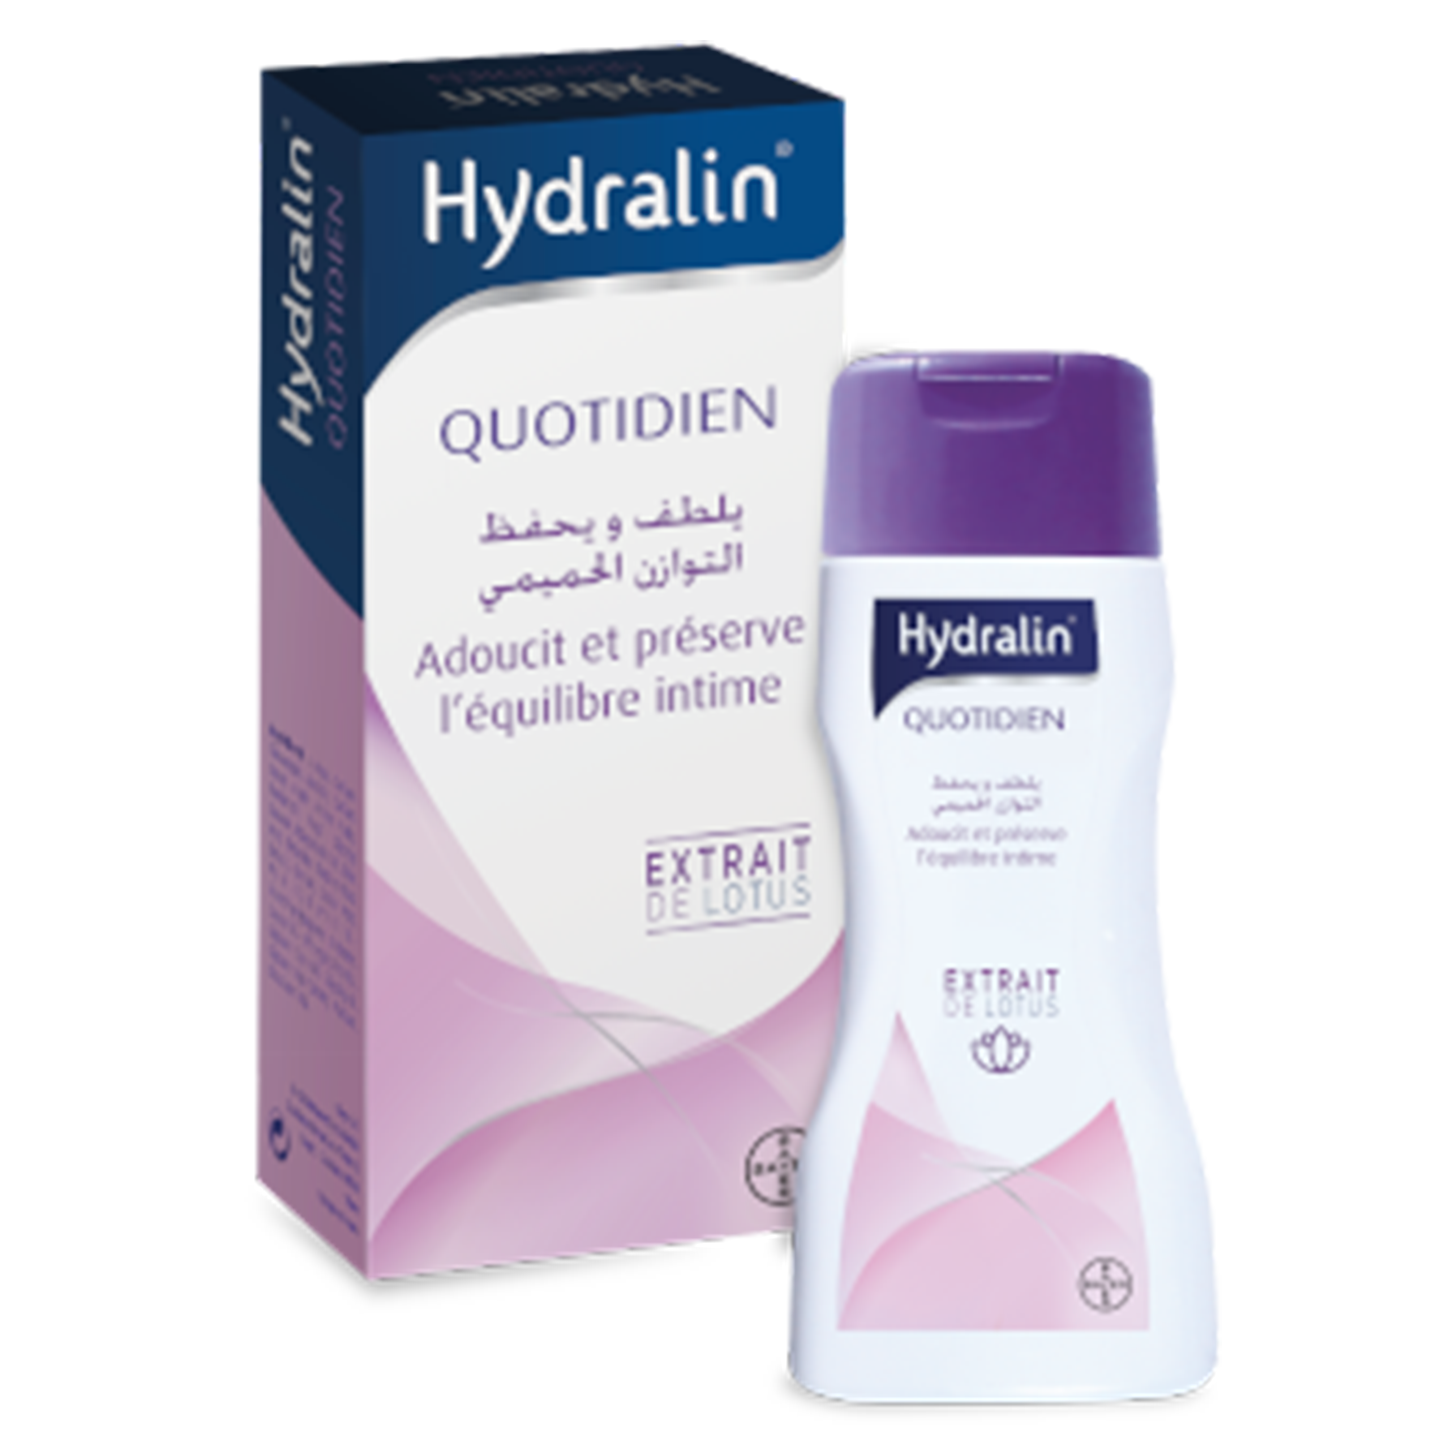 Hydralin Quotidien 200ml